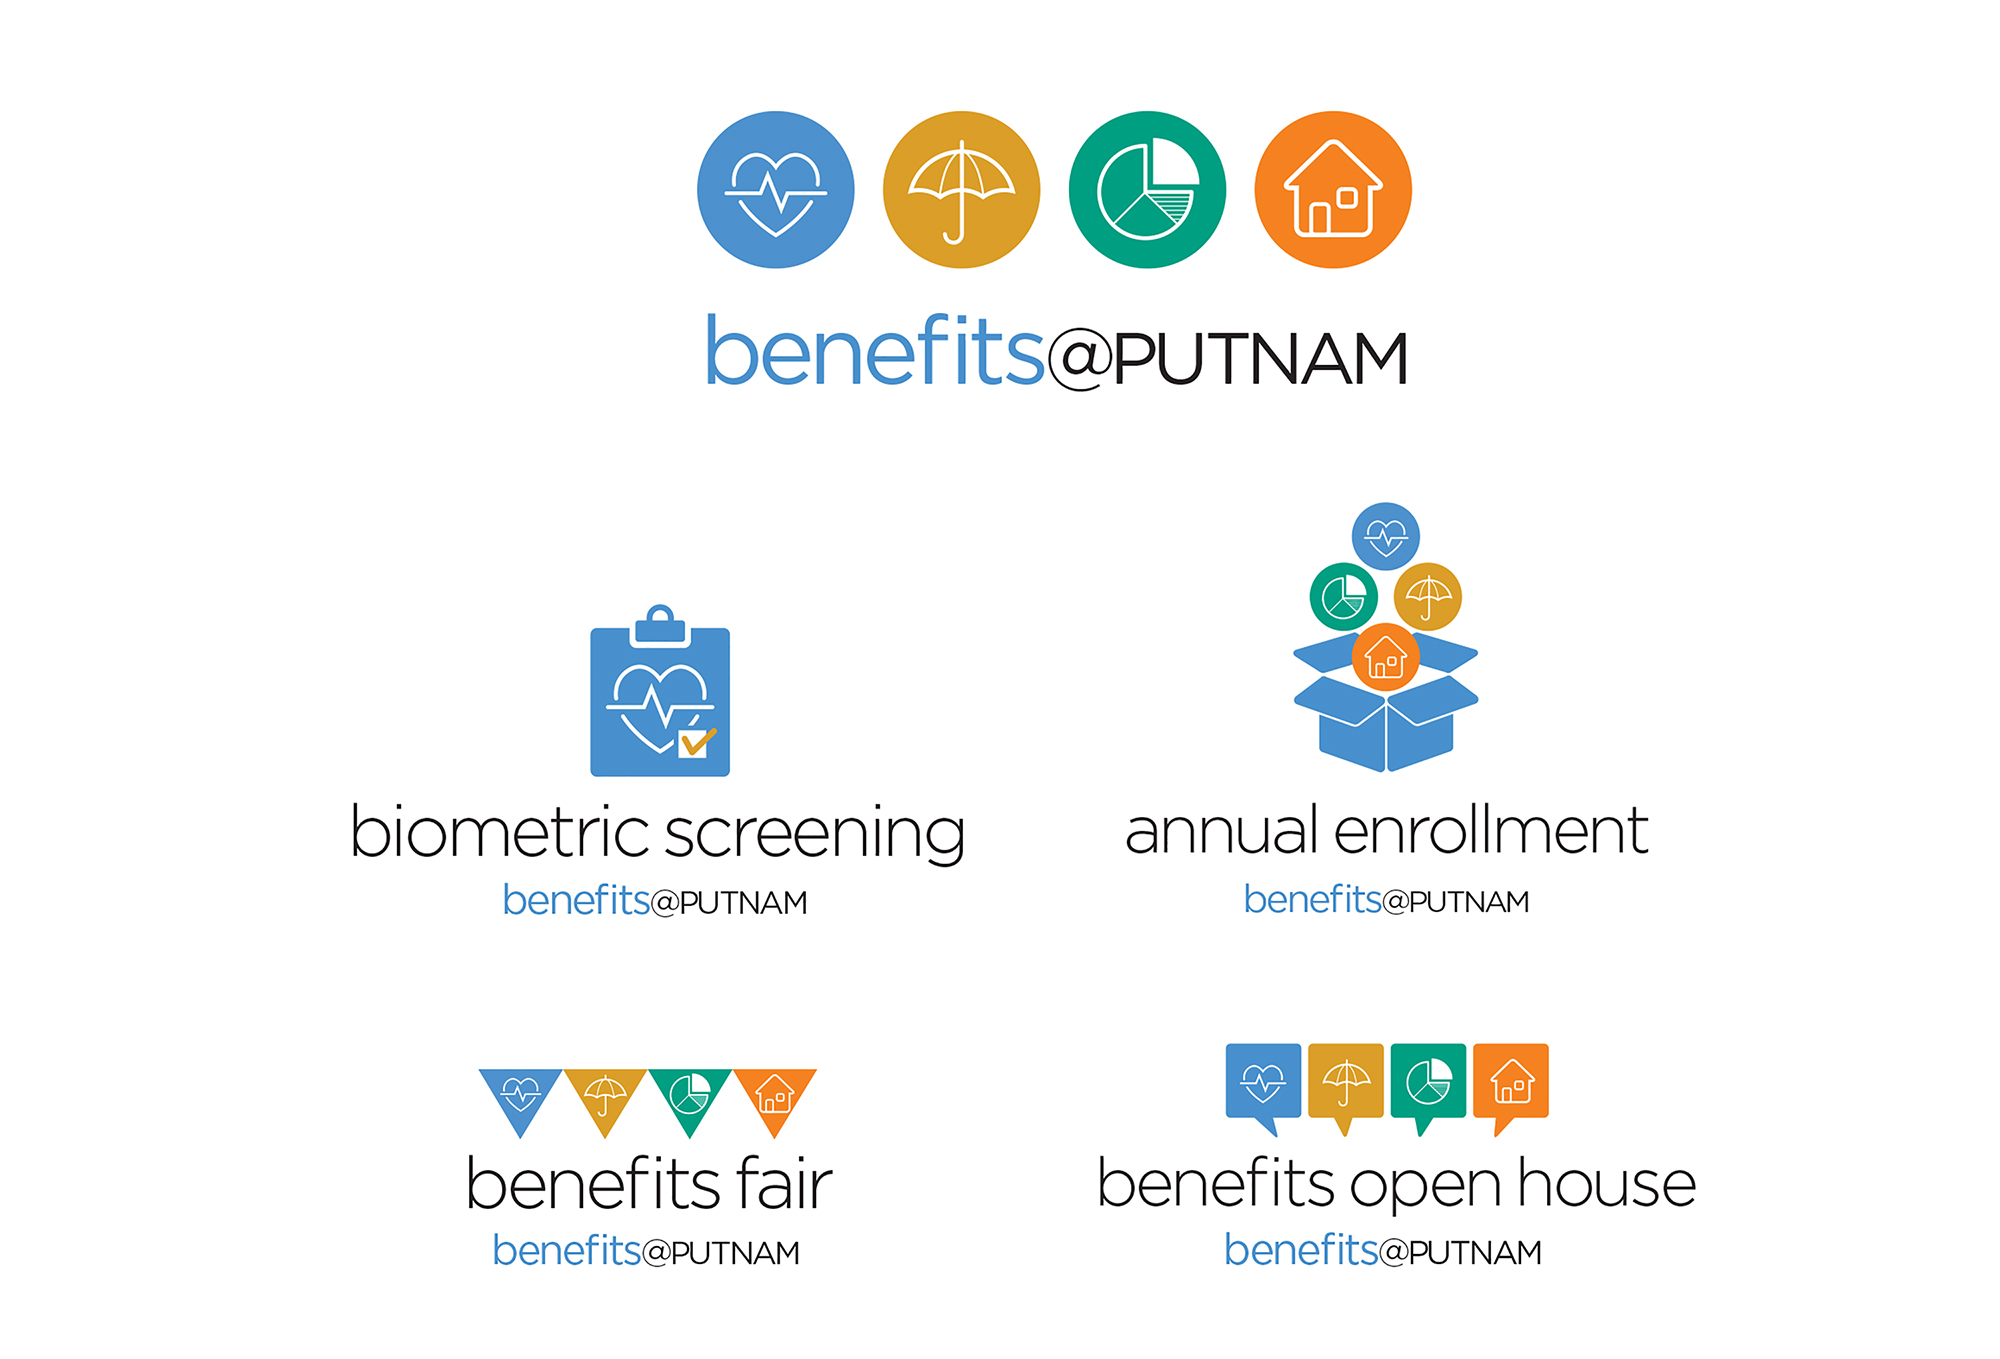 Putnam-Benefits-2015-logos